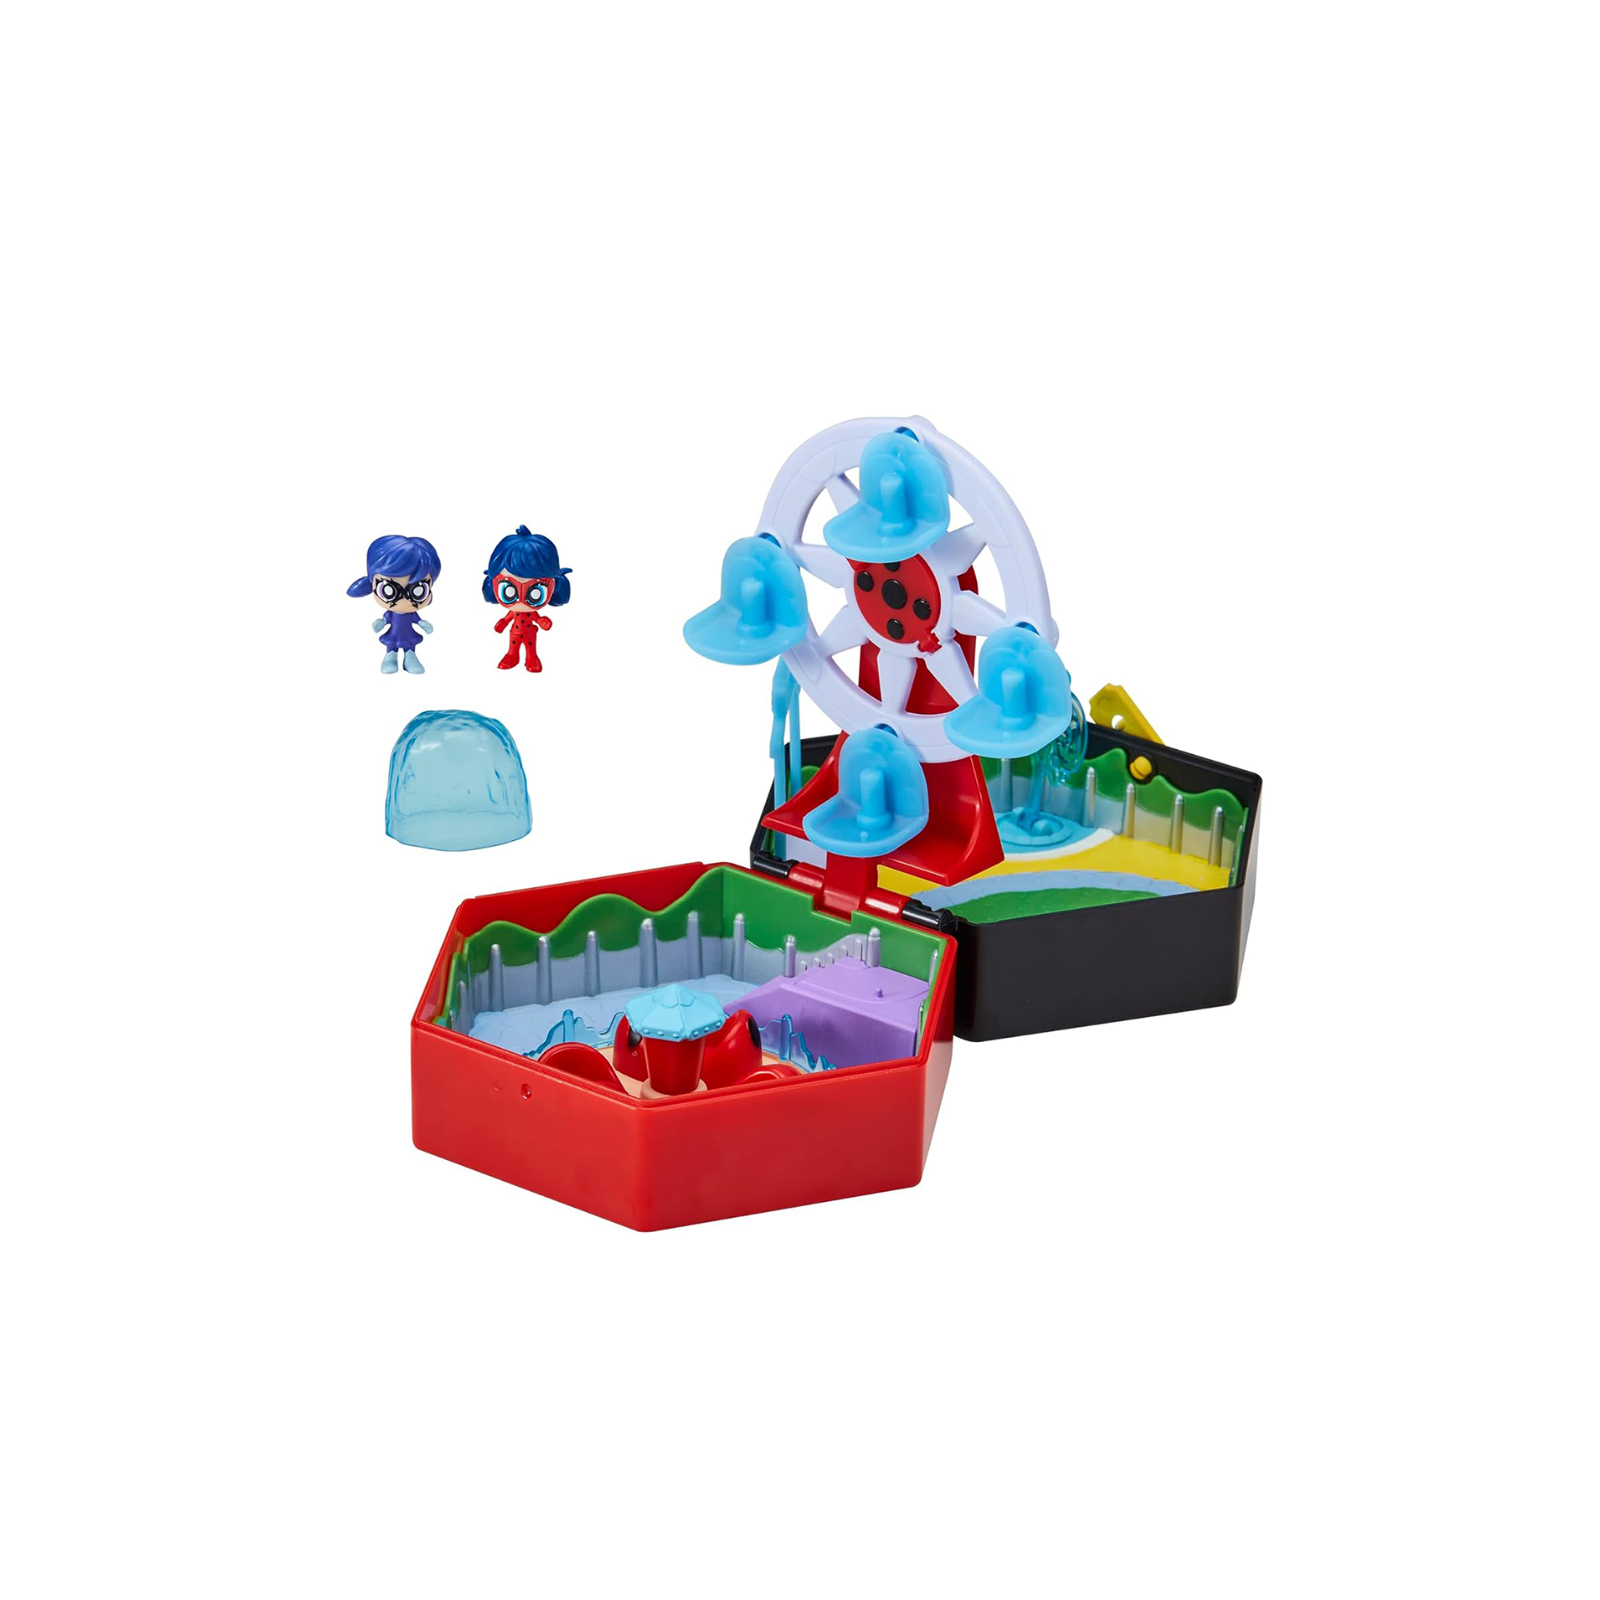 Игровой набор Miraculous Леди Баг и Супер-кот Chibi Парк развлечений 2 фигурки с аксессуарами (50553)